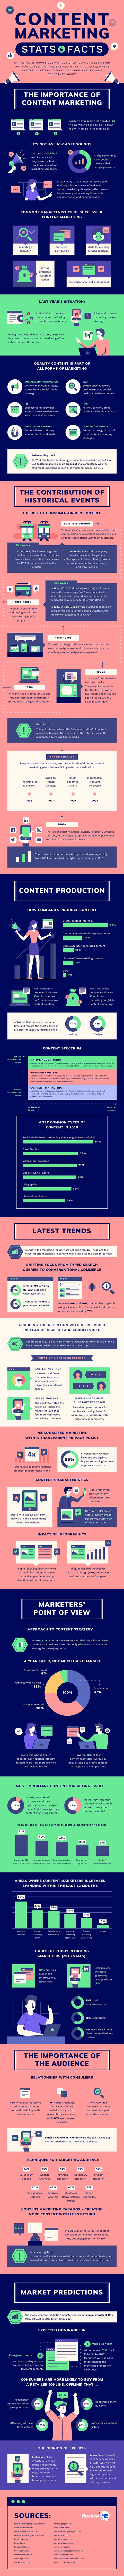 Content Marketing Statistics - Infographic